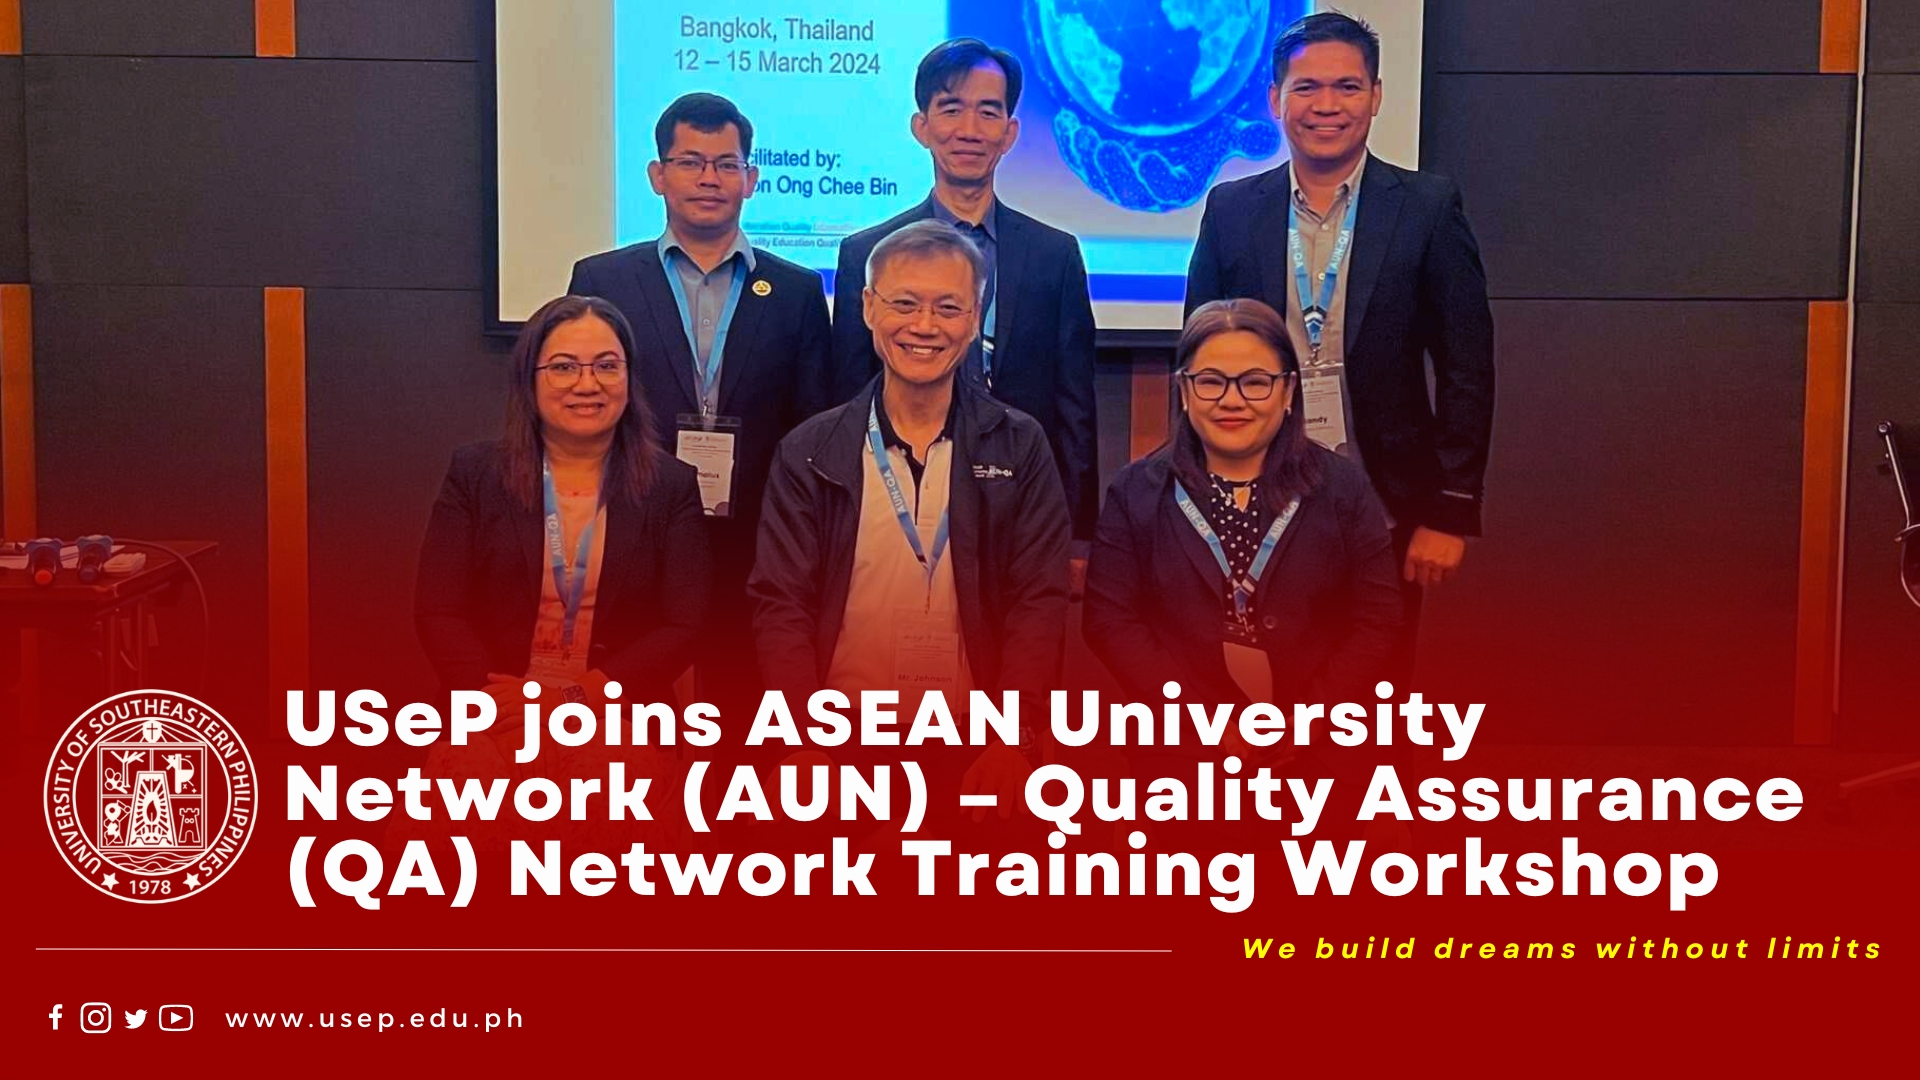 USeP joins ASEAN University Network (AUN) – Quality Assurance (QA) Network Training Workshop